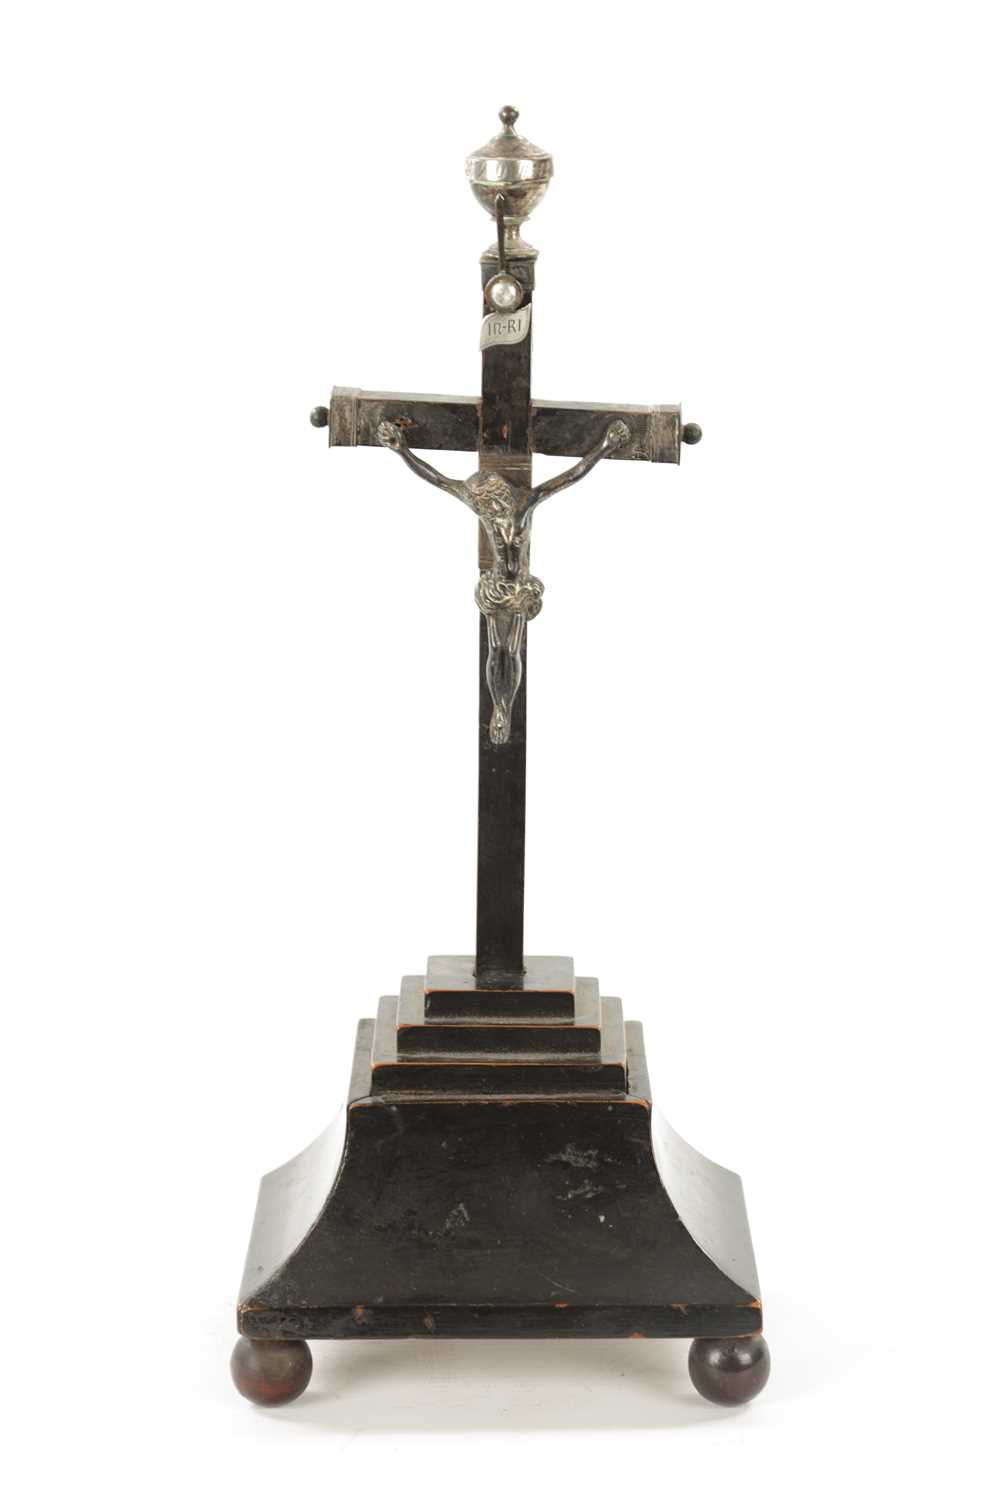 Lot 1350 - A 19TH CENTURY EBONISED AND SILVER MOUNTED CORPUS CHRISTI CLOCK